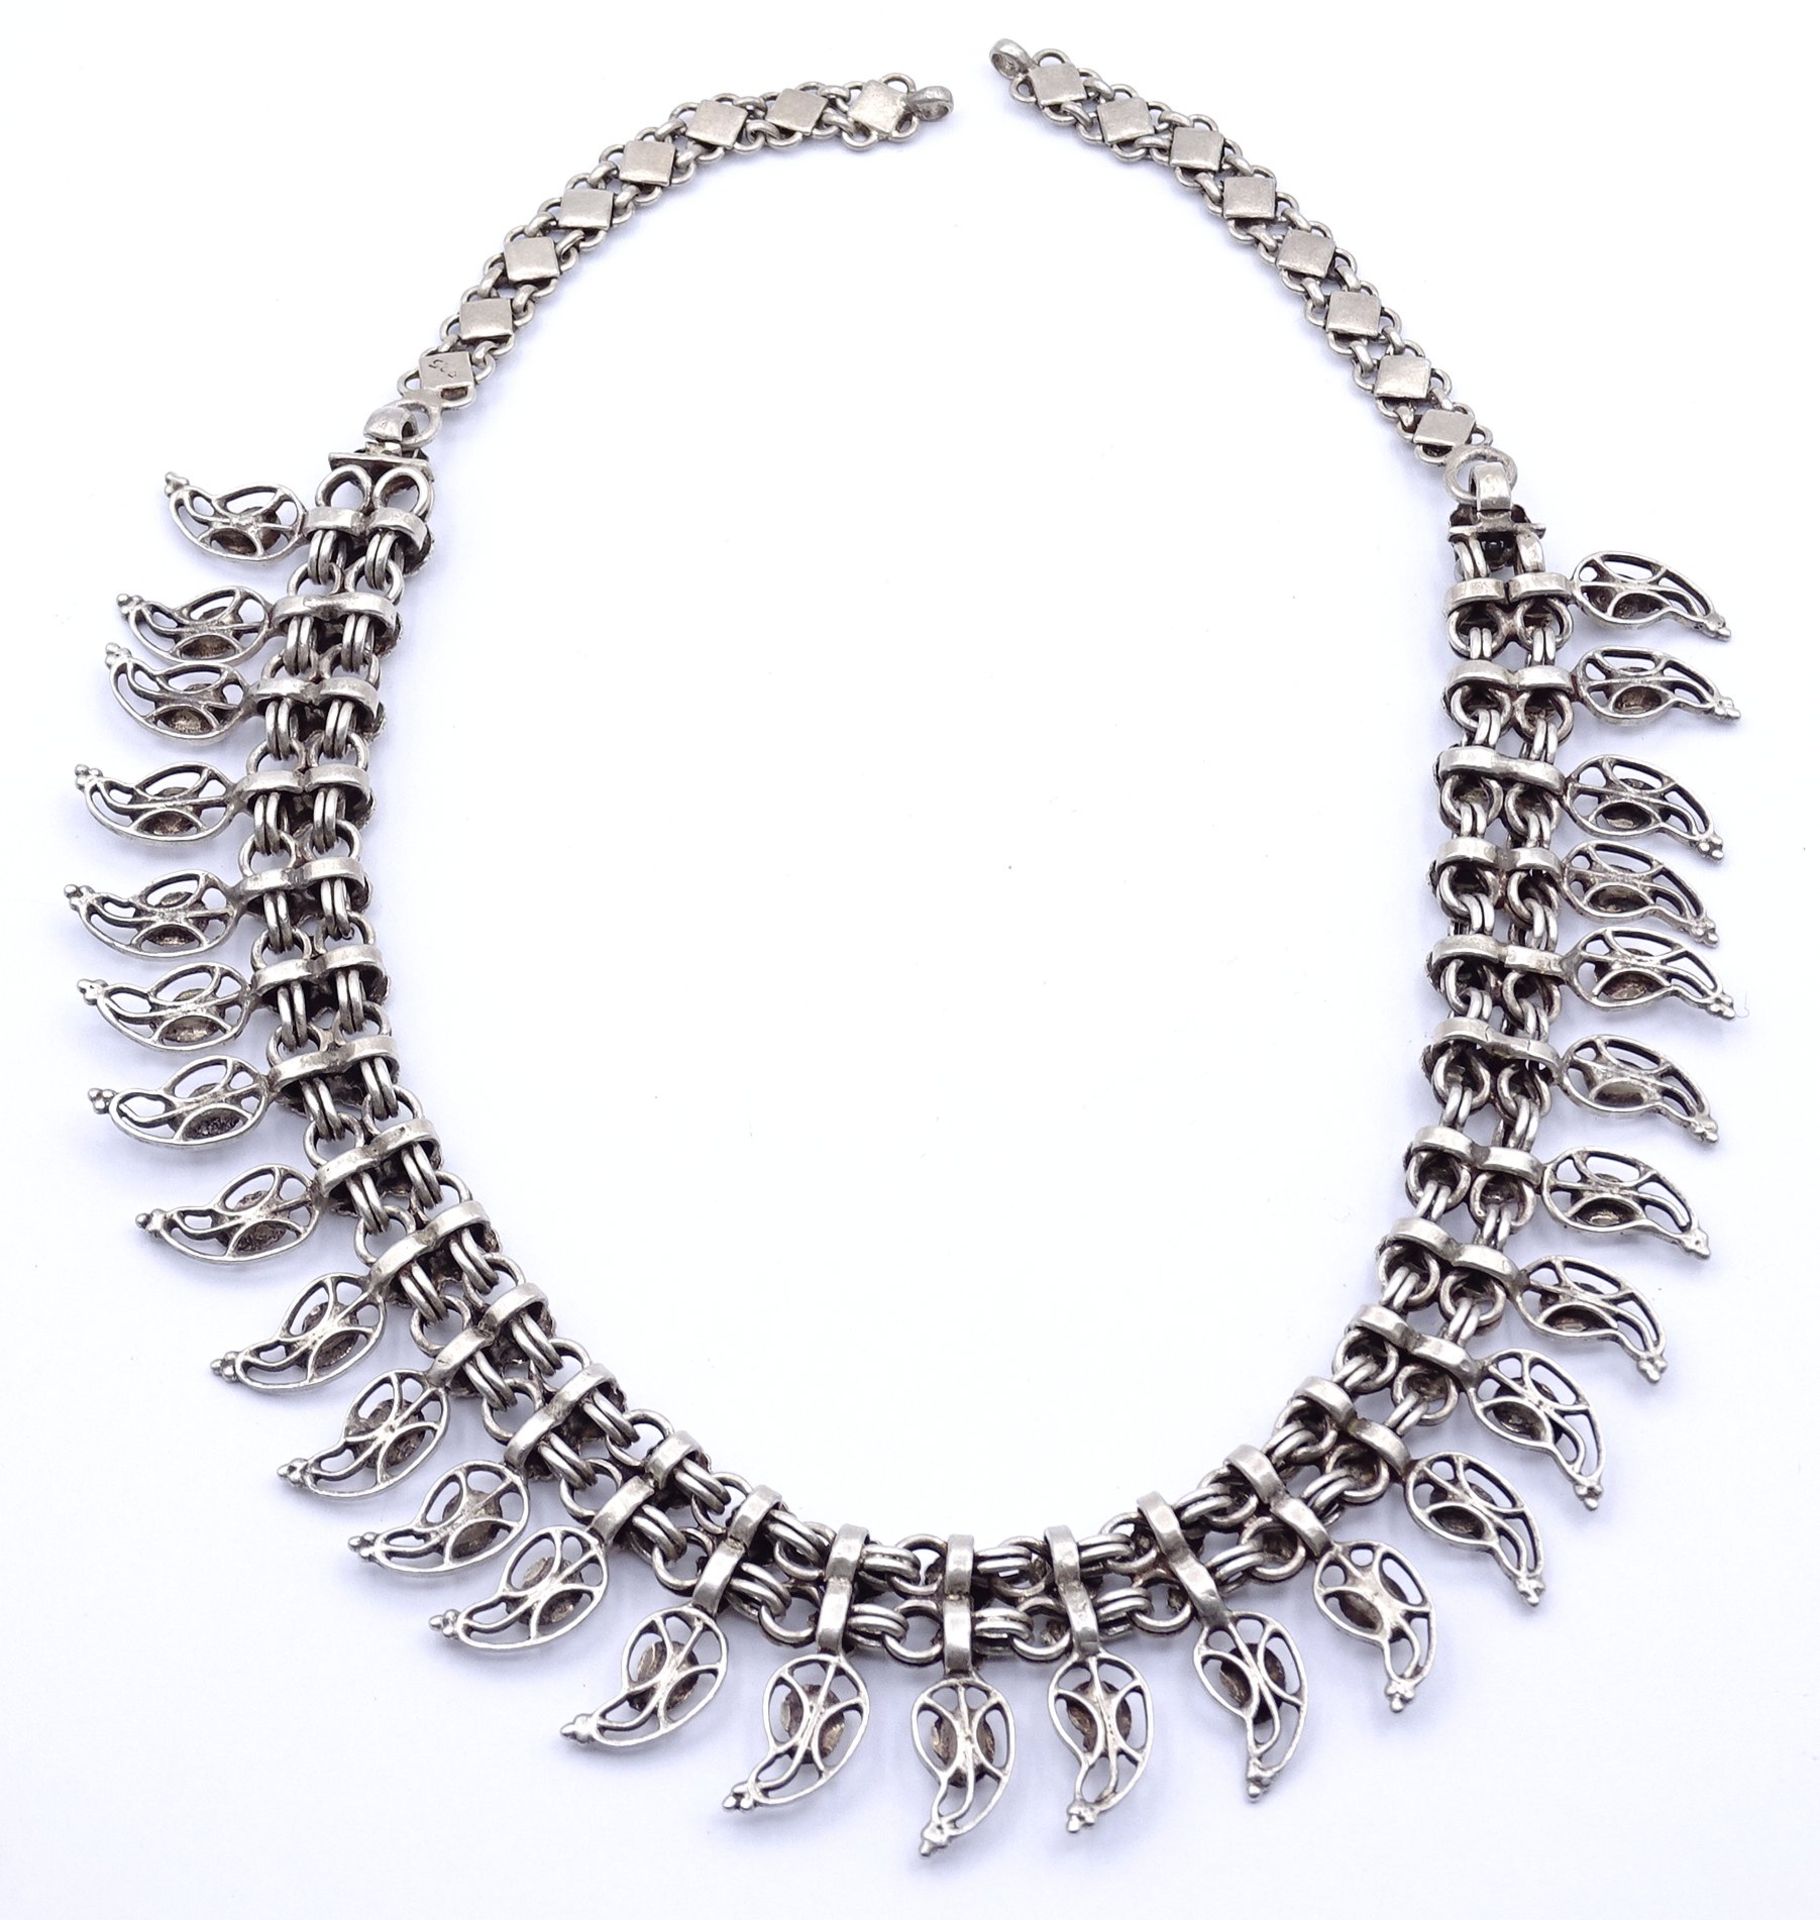 Massive Silber Halskette, L. 43,5cm, 88,5g., Verschluss fehlt - Image 4 of 5